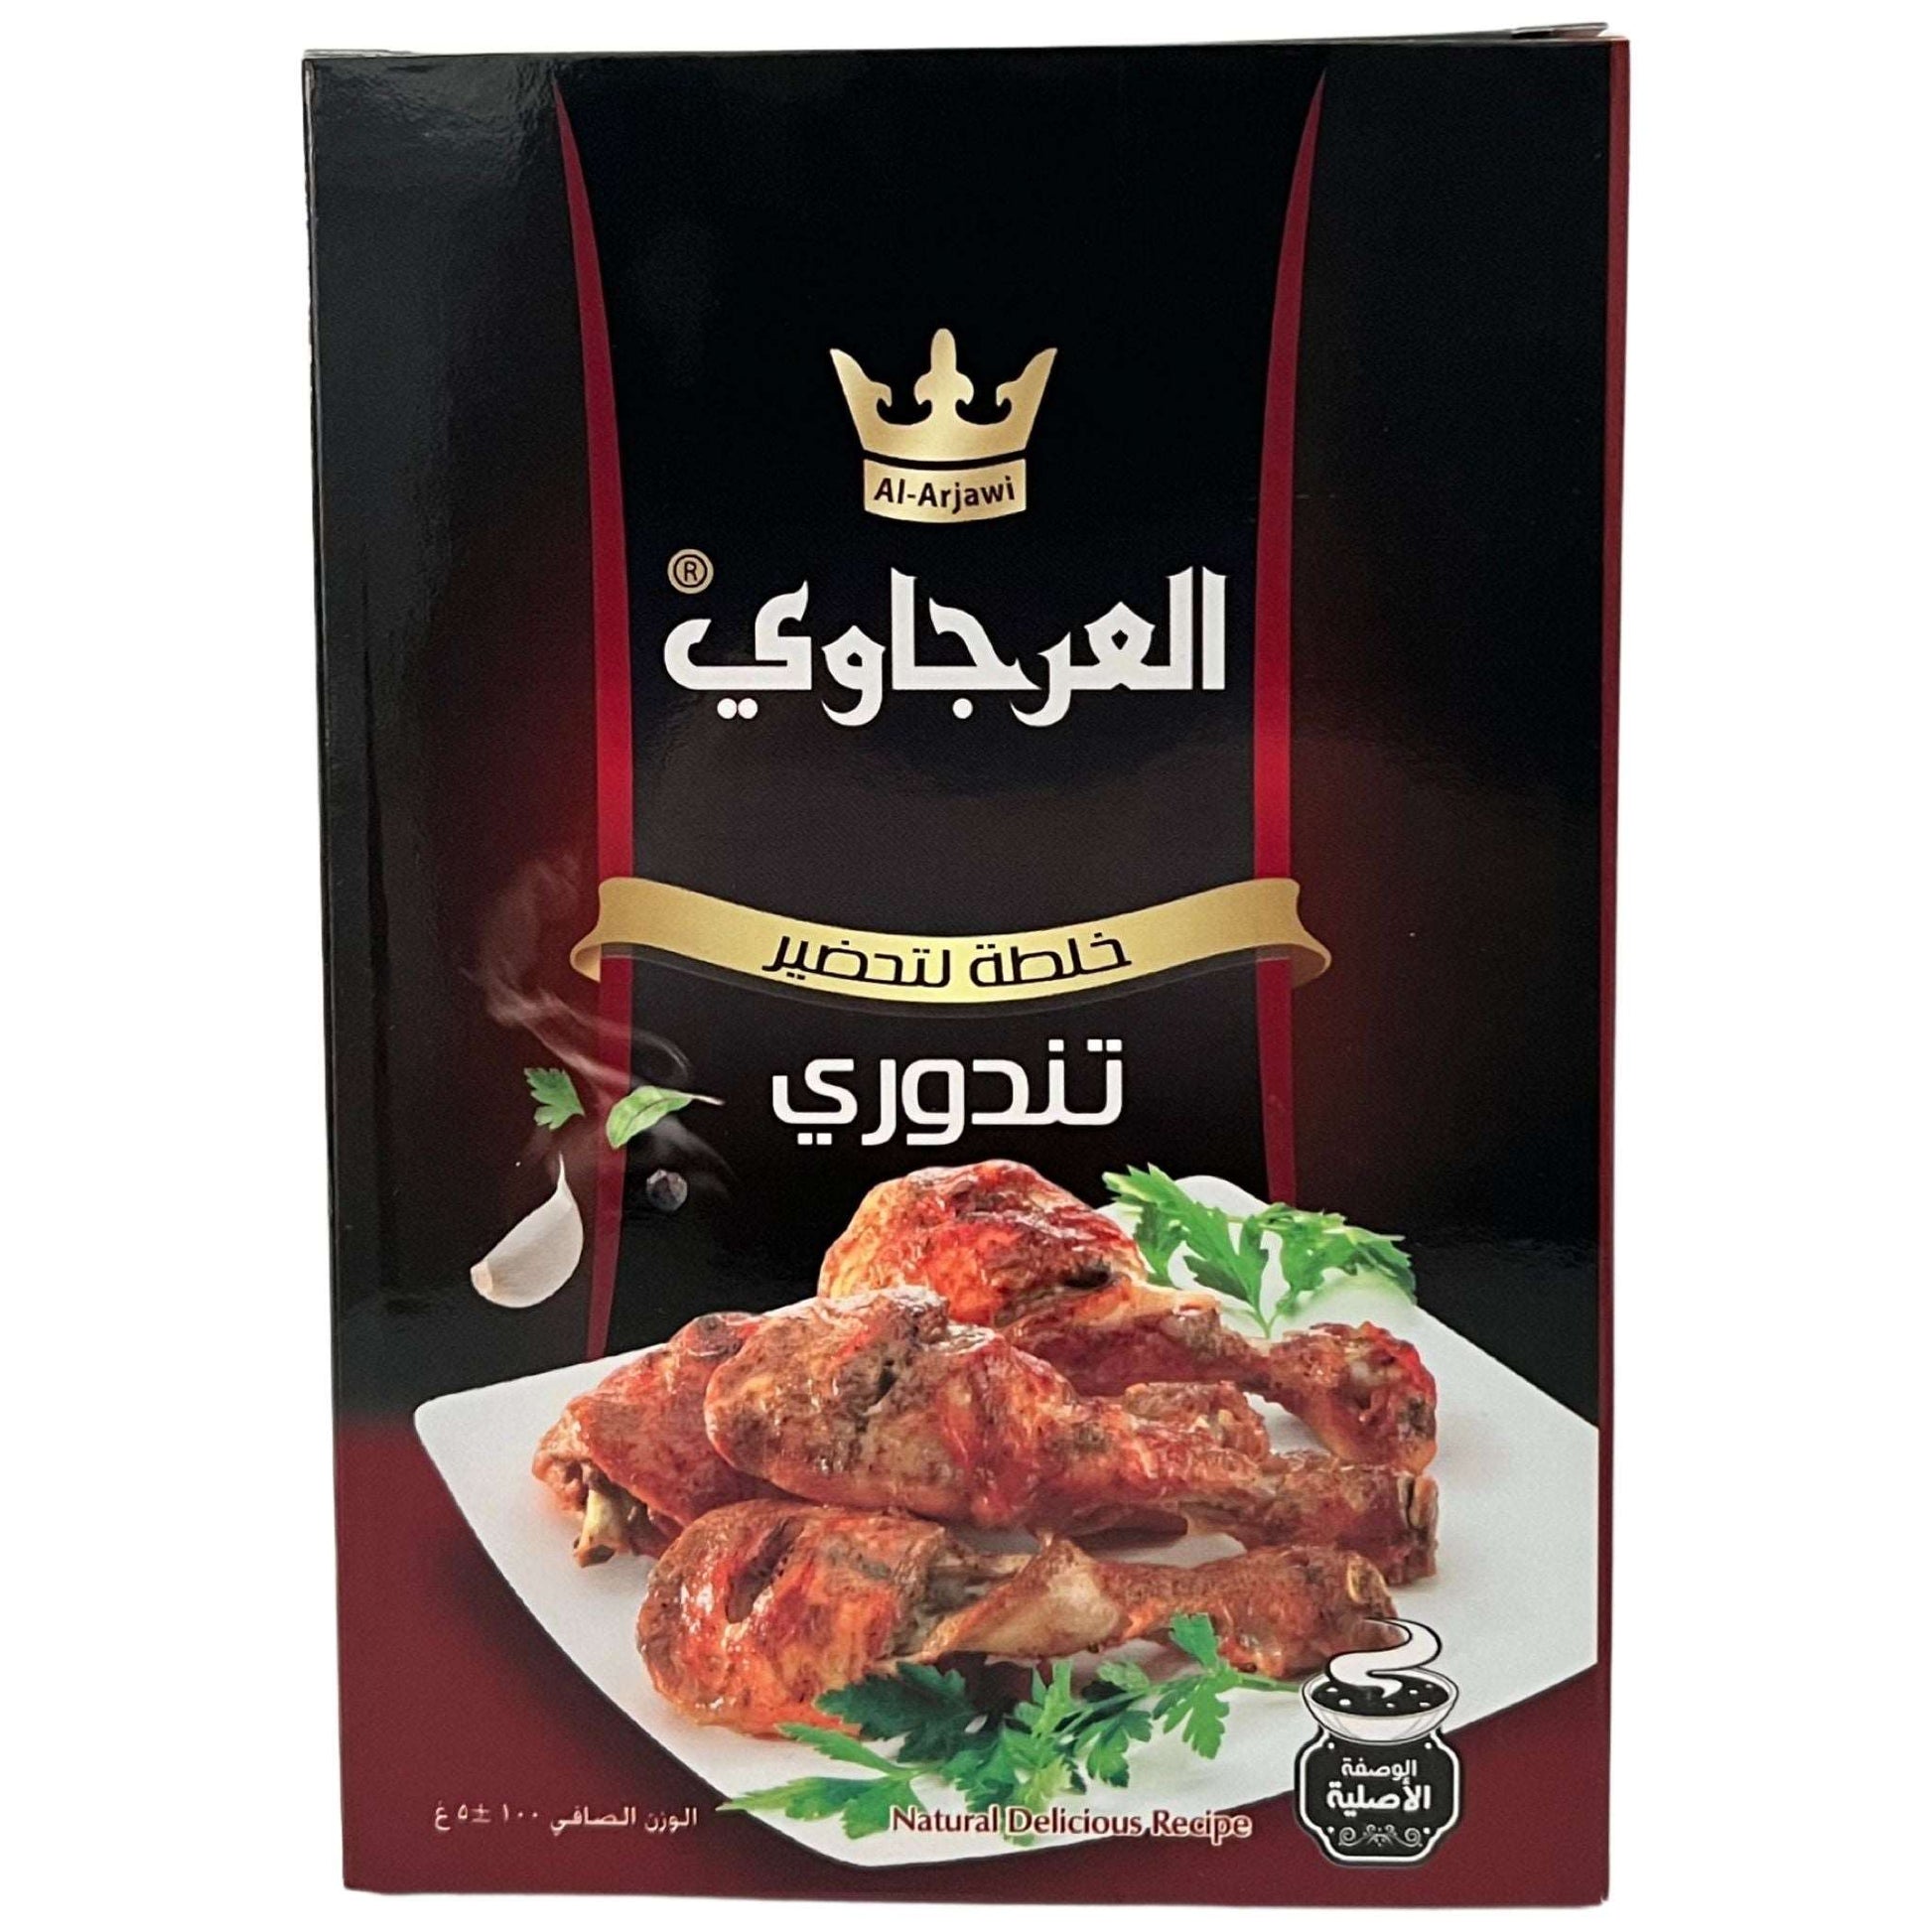 AlArjawi Tandoori Chicken Spices Mix - Damaski